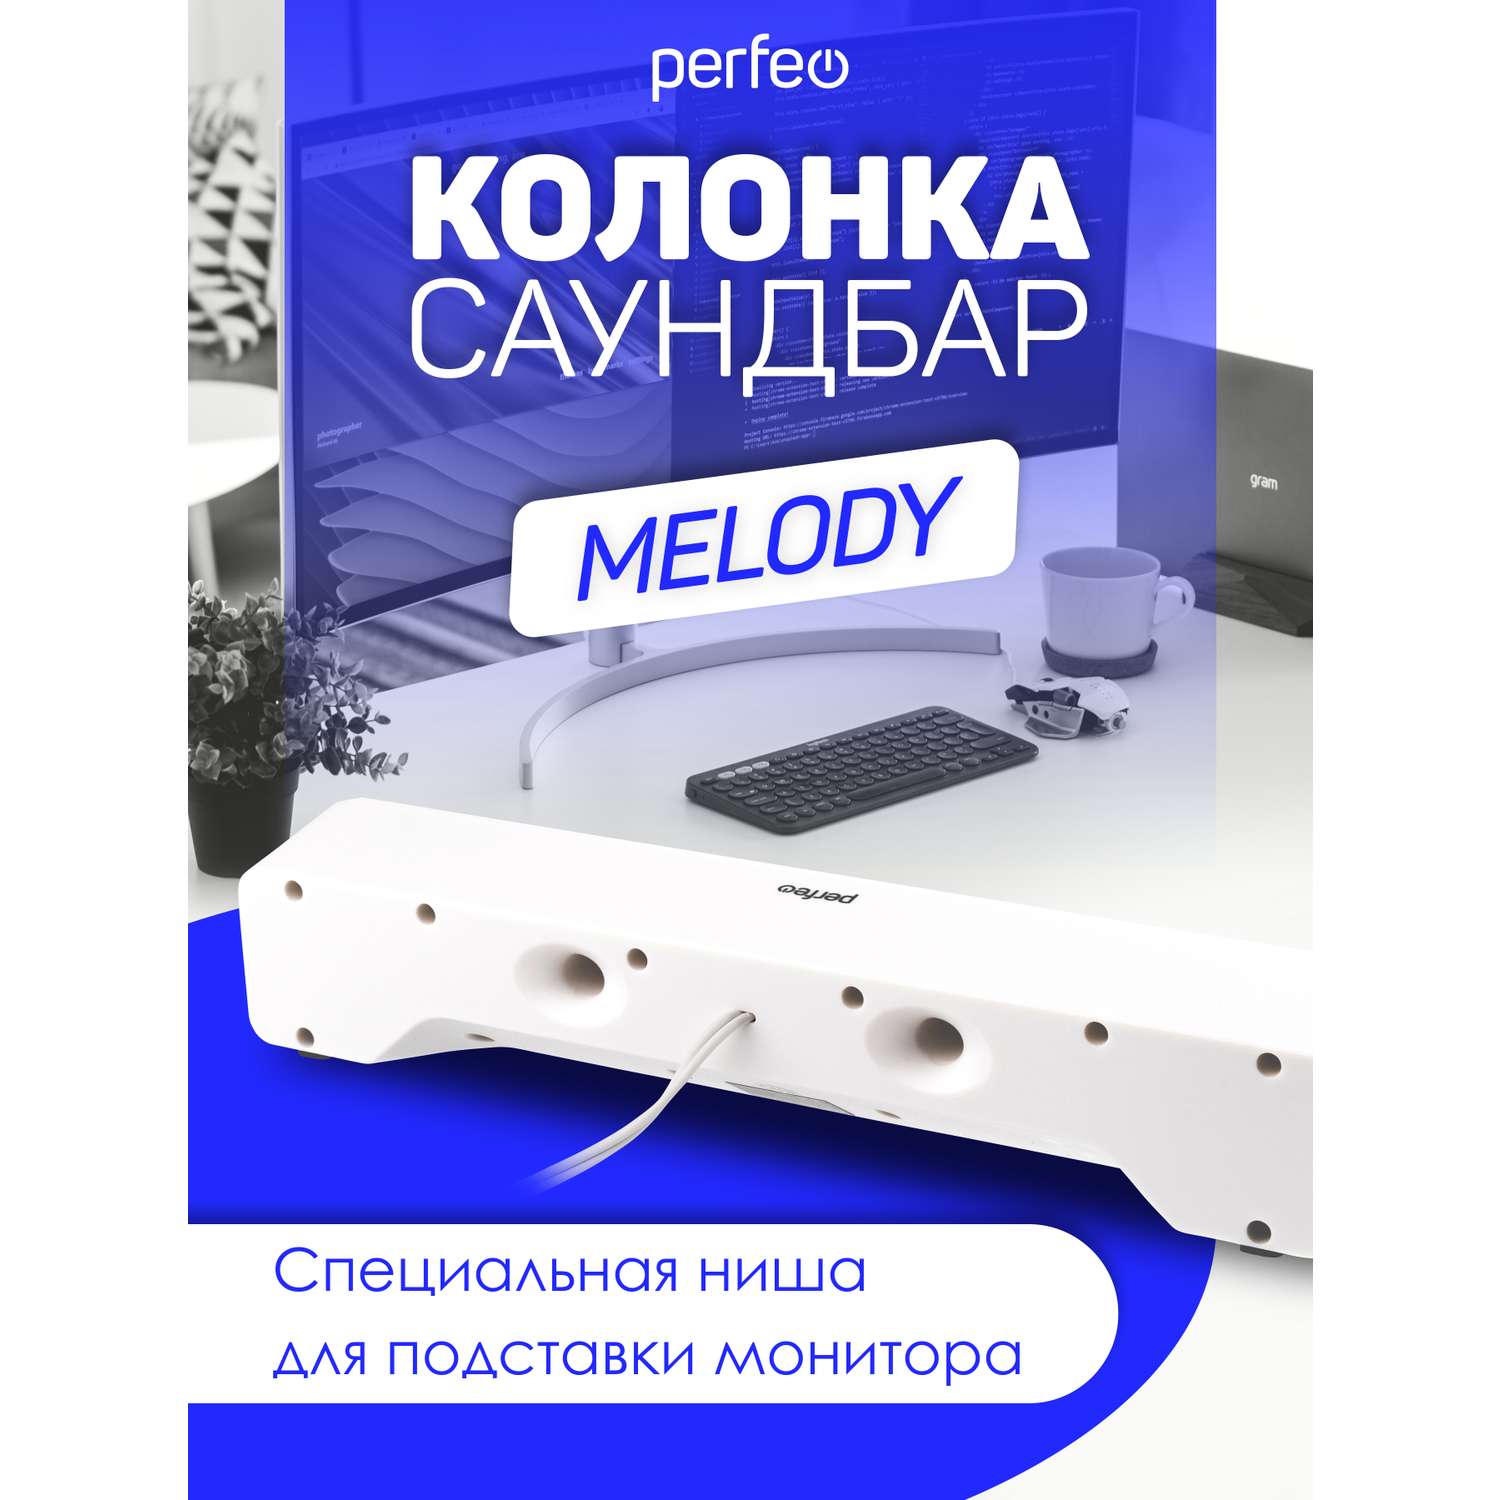 Колонка-саундбар Perfeo компьютерная MELODY мощность 6 Вт USB пластик белый - фото 3